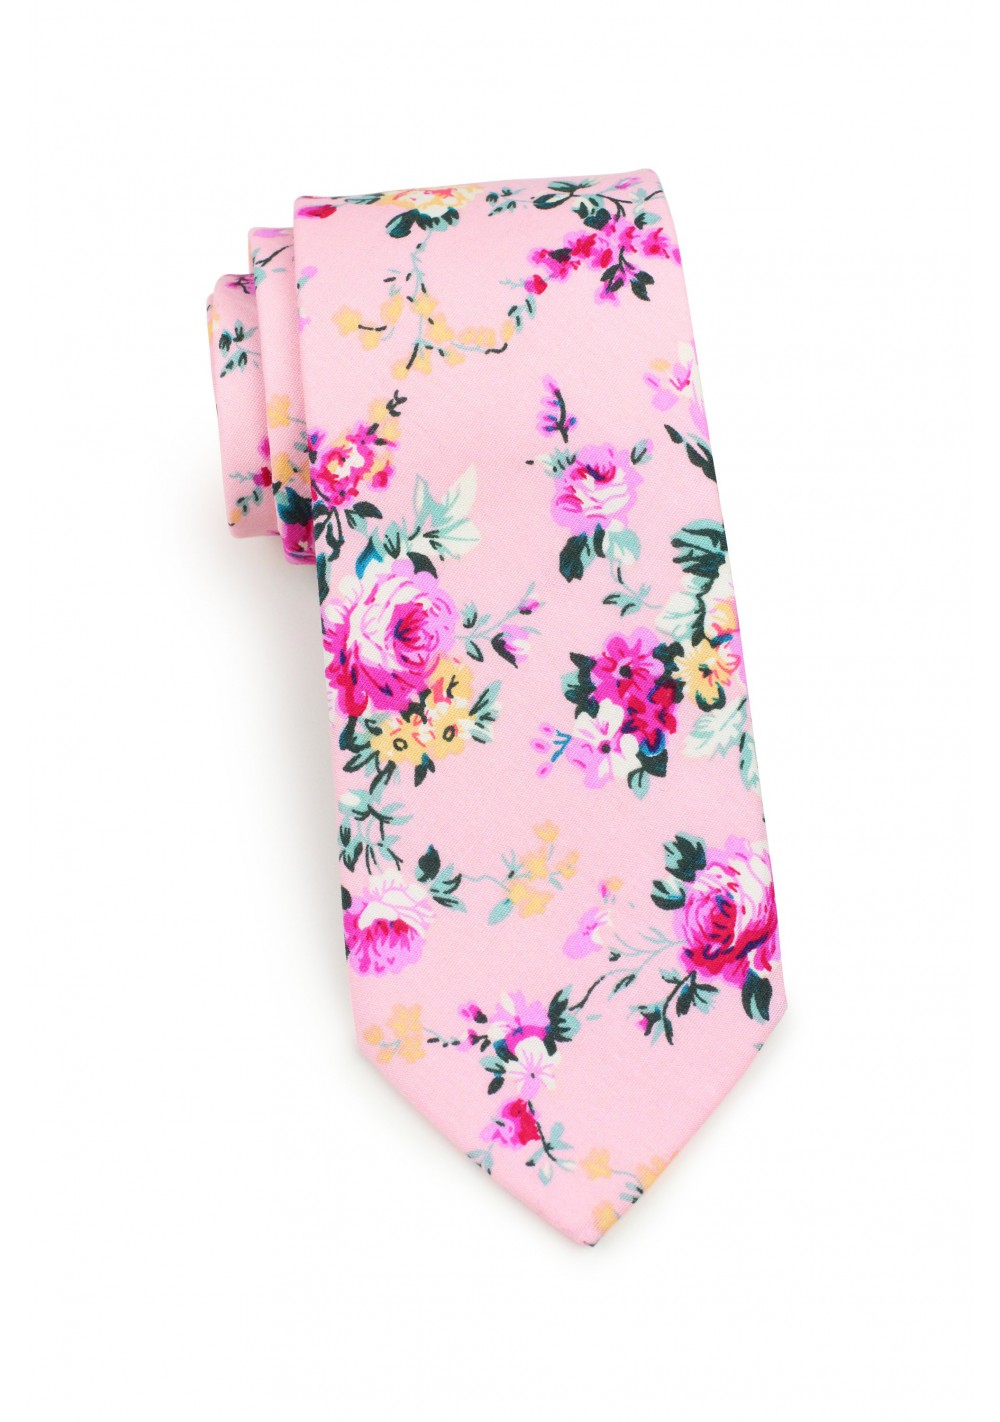 Cotton Floral Skinny Tie Set | Printed Floral Tie + Pocket Square in ...